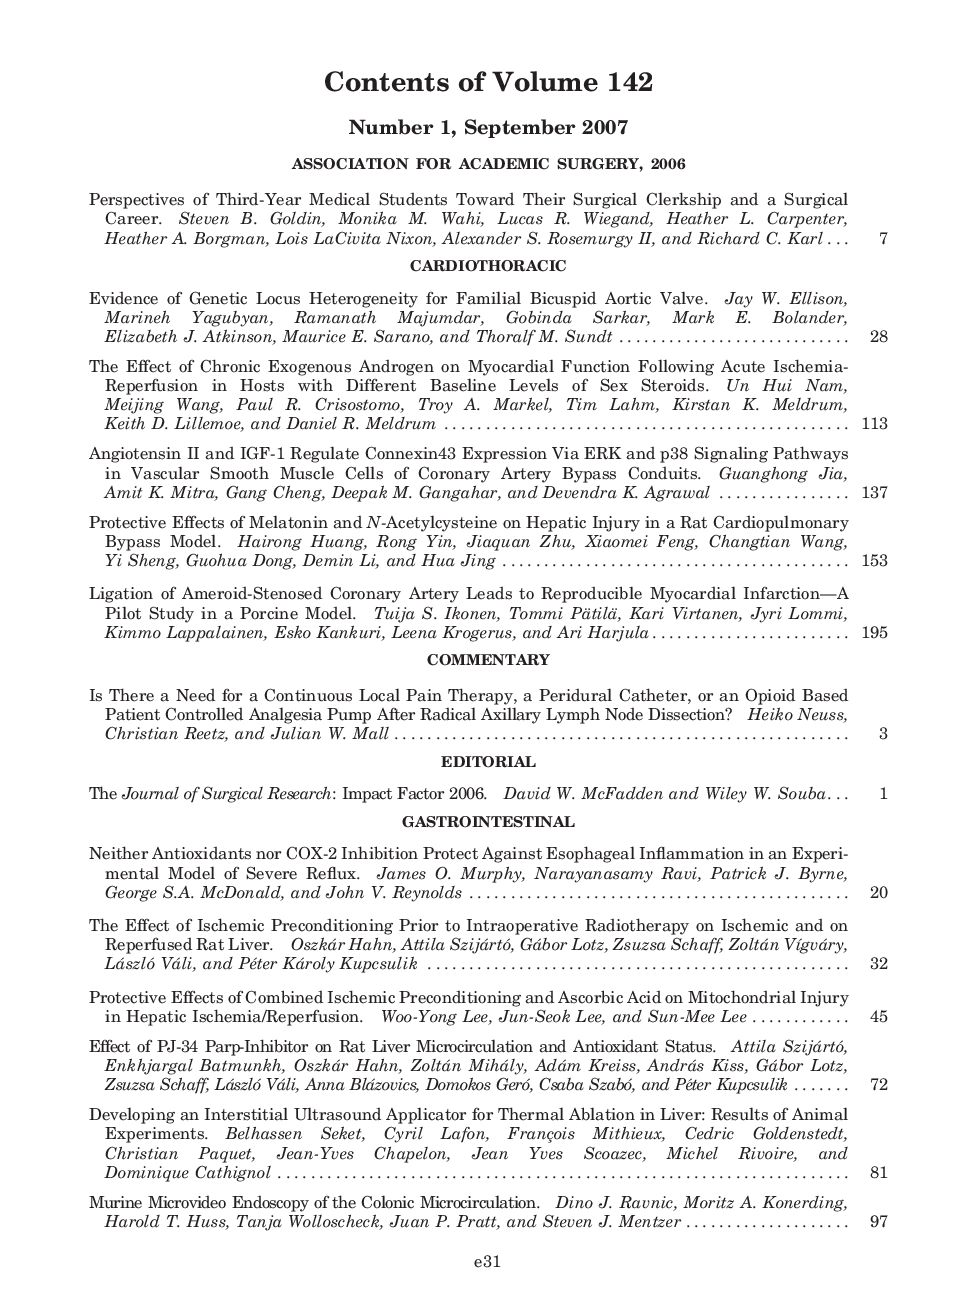 Volume Contents of Volume 142